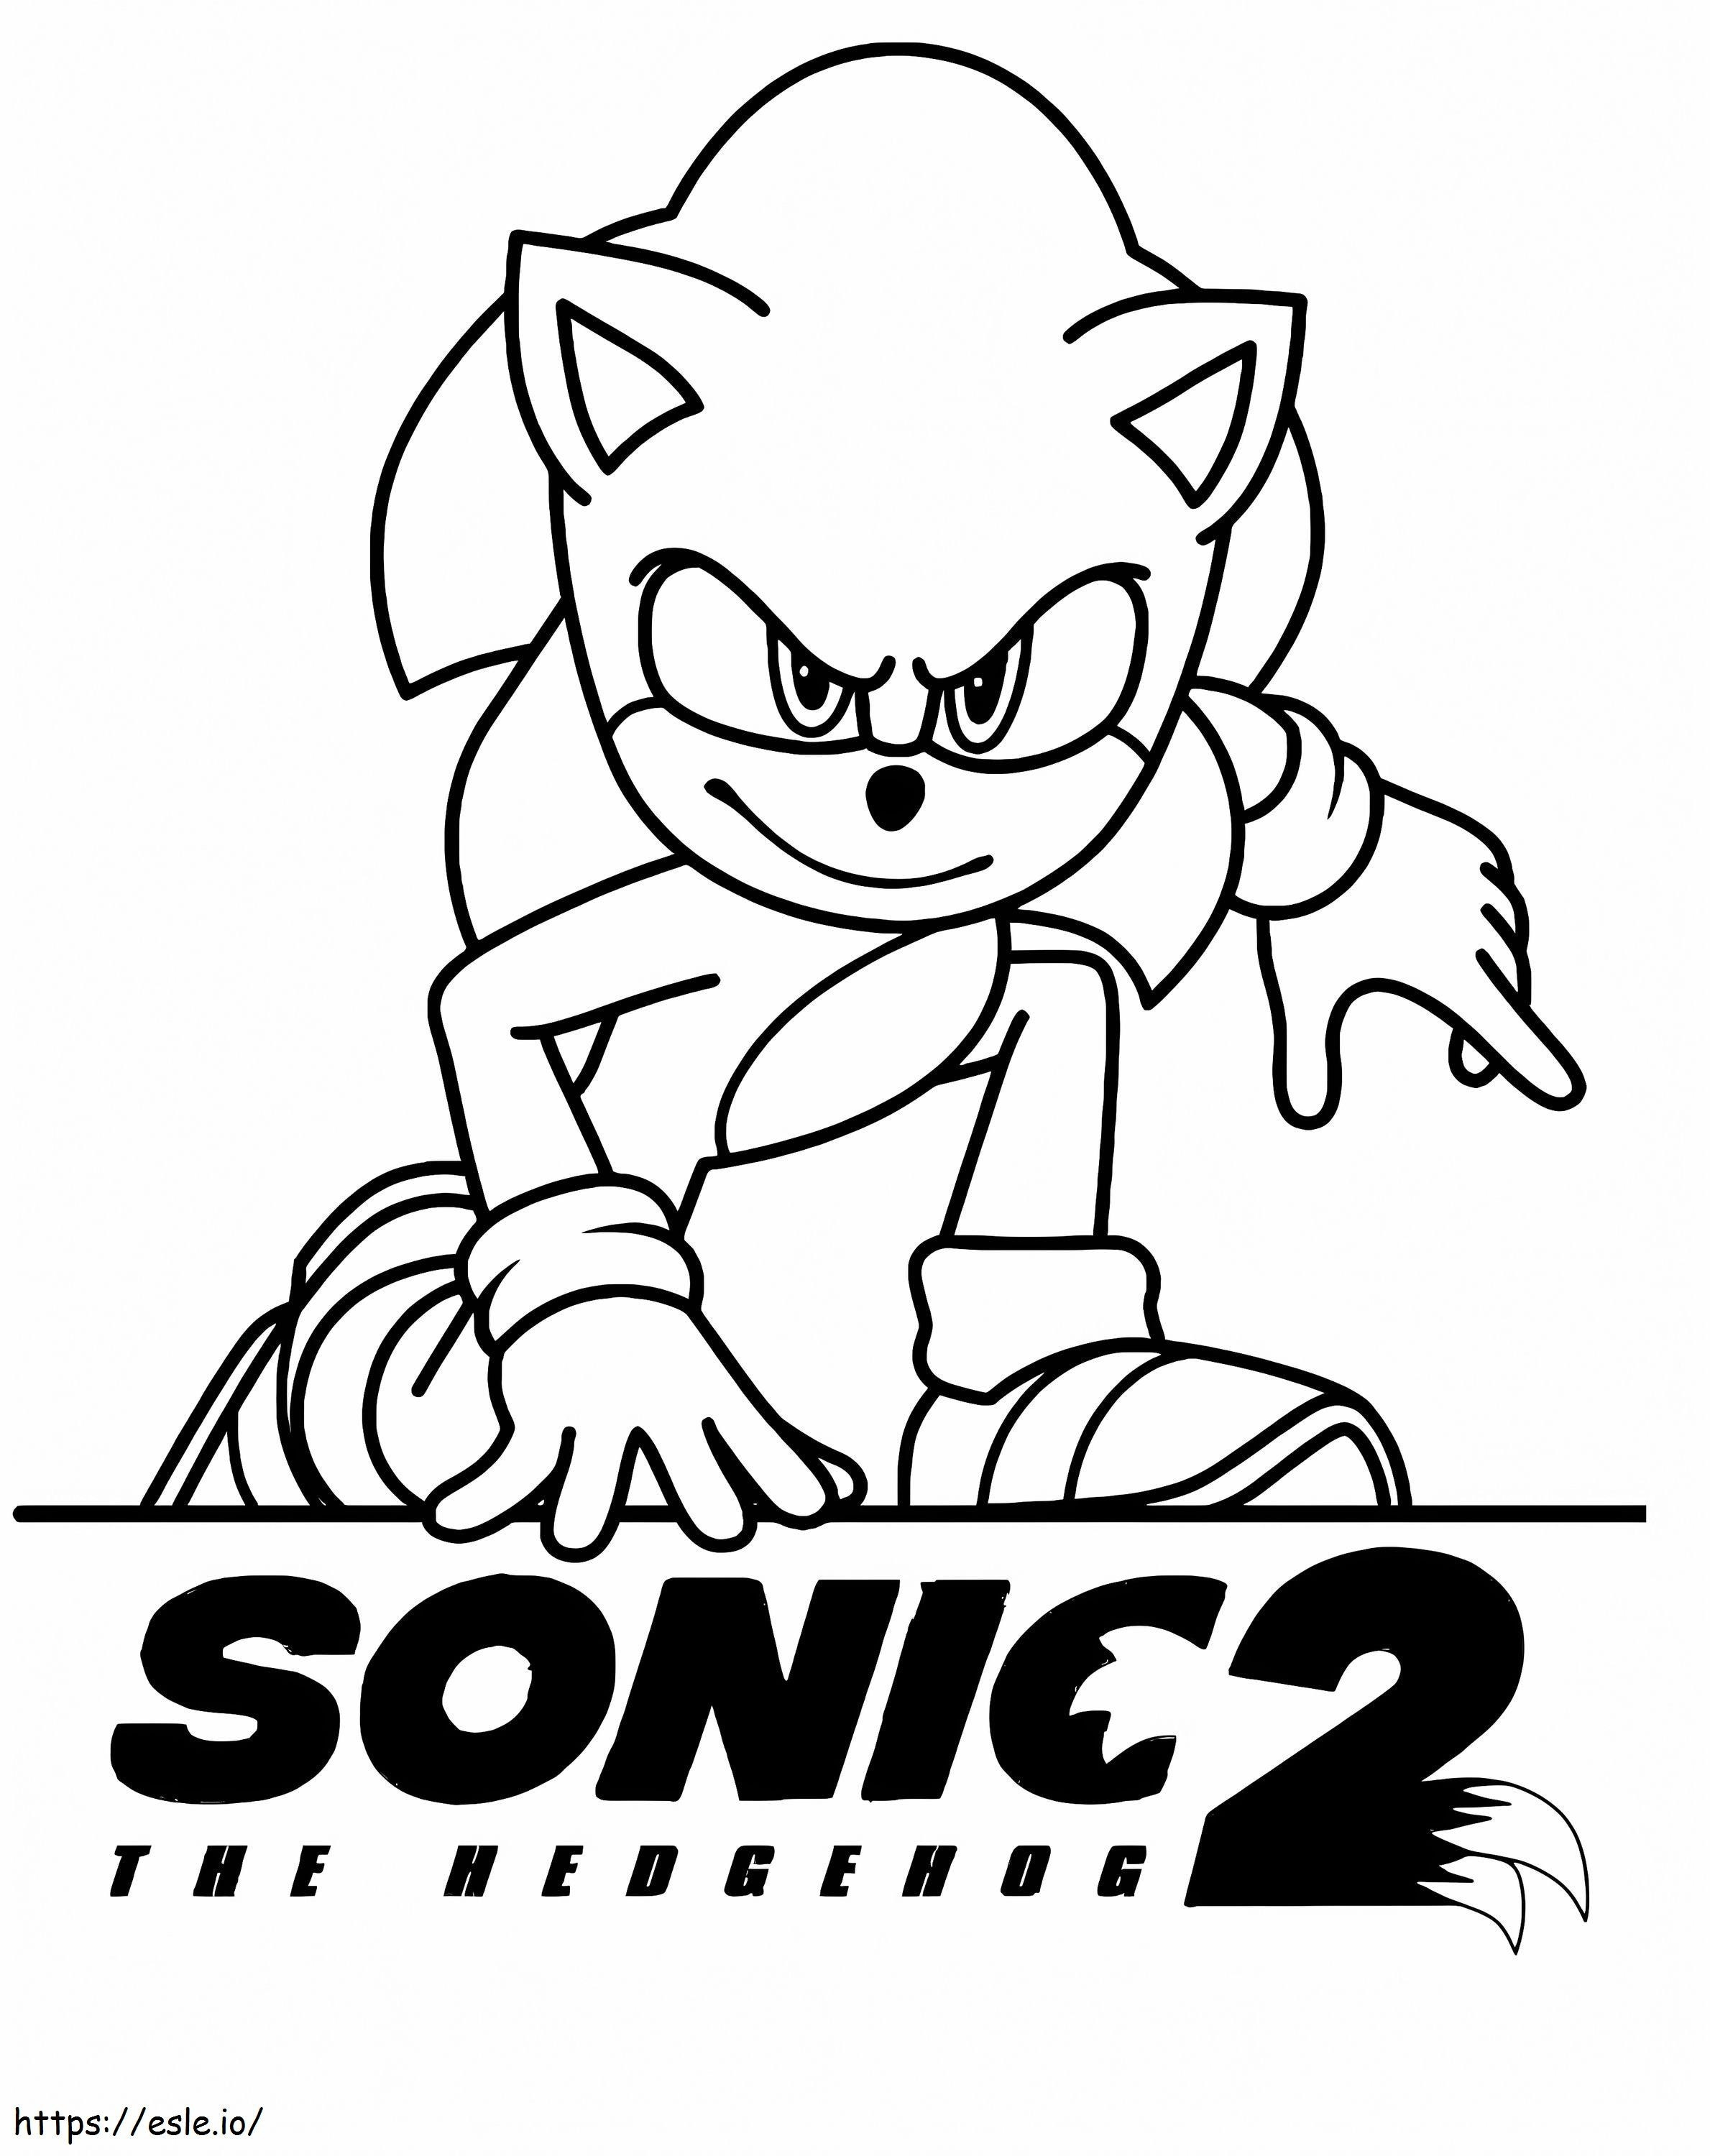 Sonic The Hedgehog 2 ausmalbilder